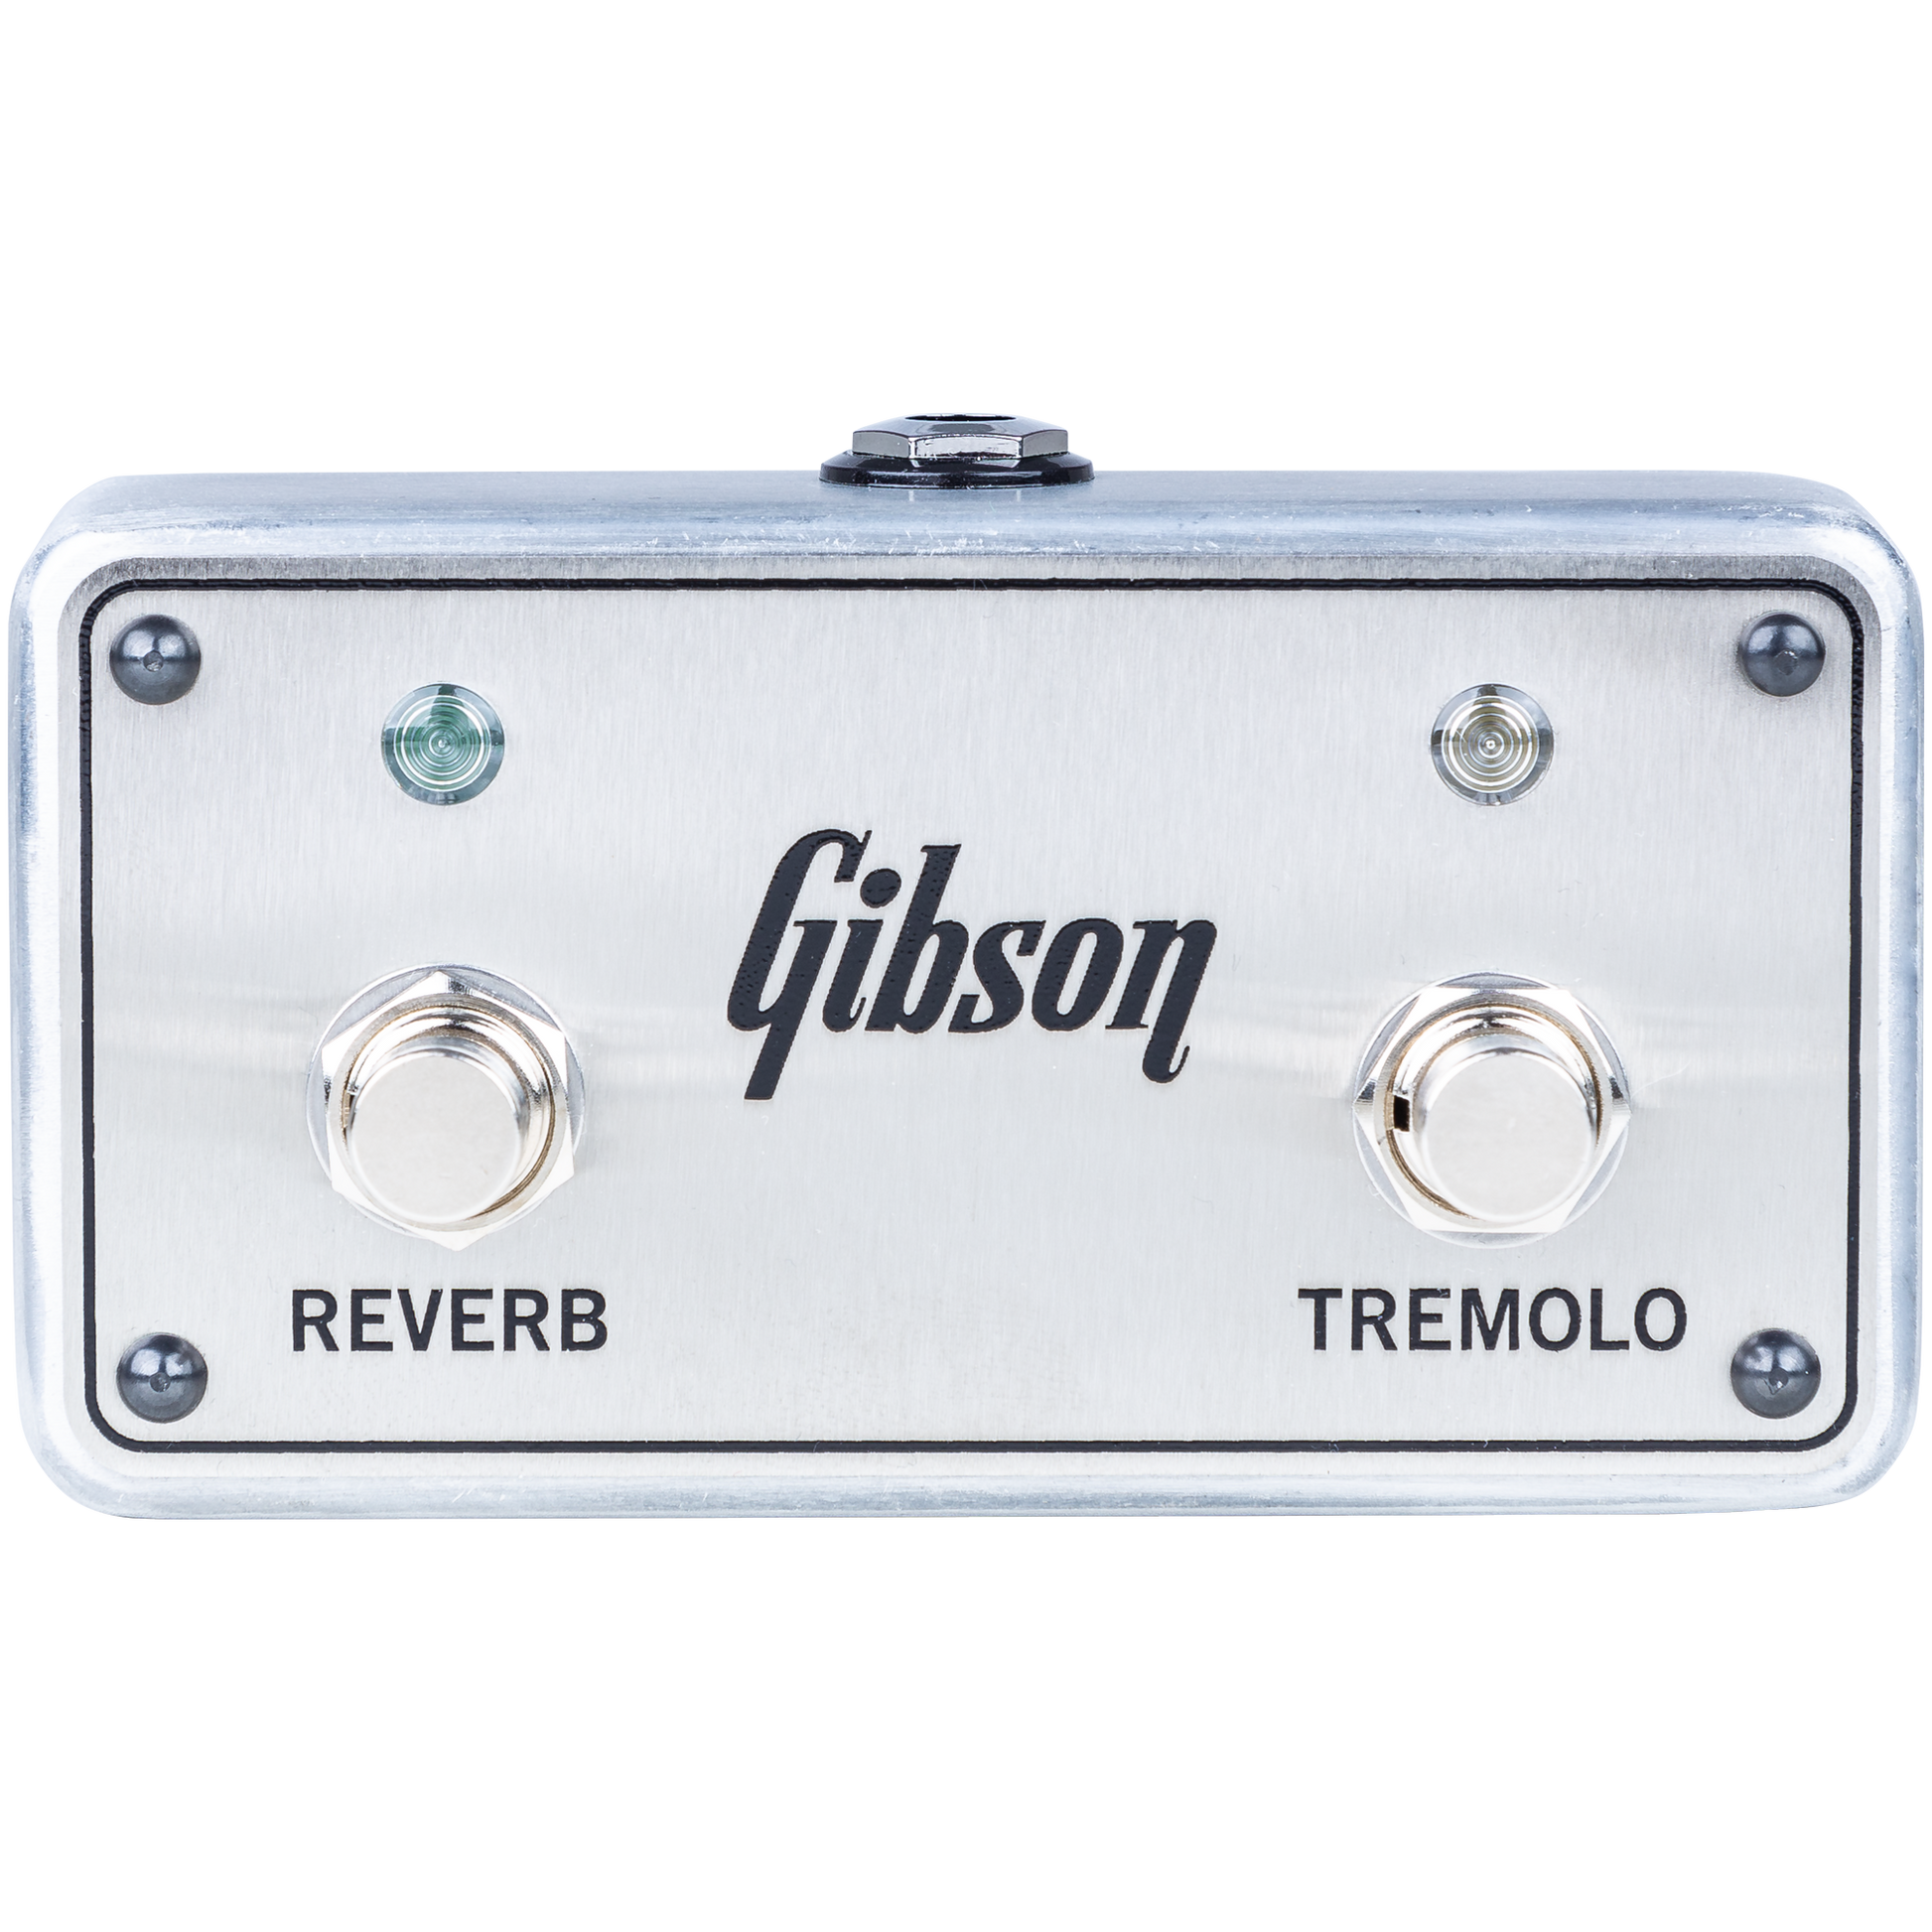 Gibson Falcon 20 Guitar Amplifier - Danville Music